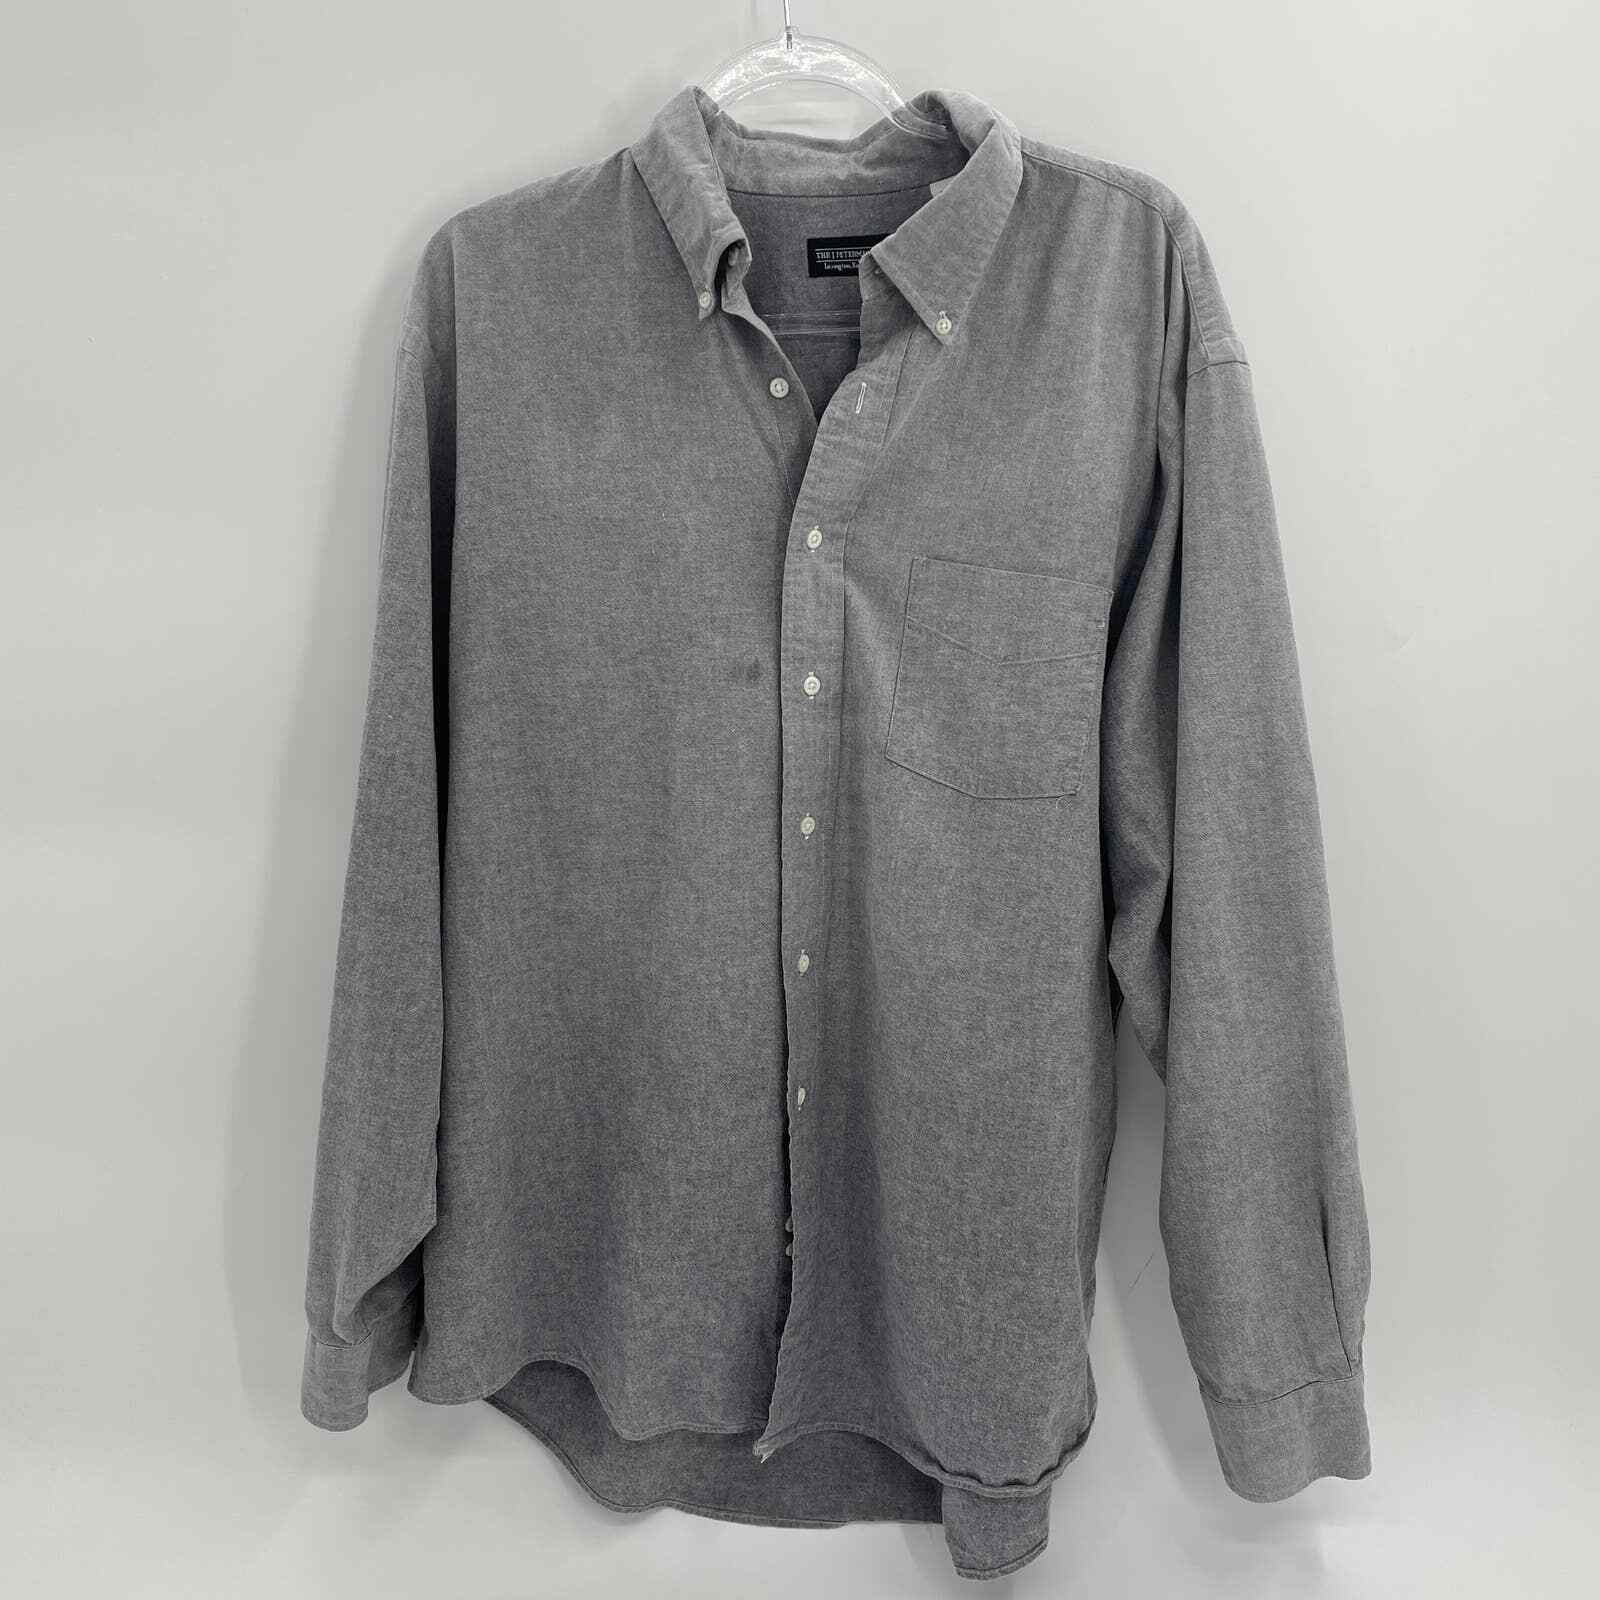 J. PETERMAN Shirt Gray Long Sleeve Business Butto… - image 1